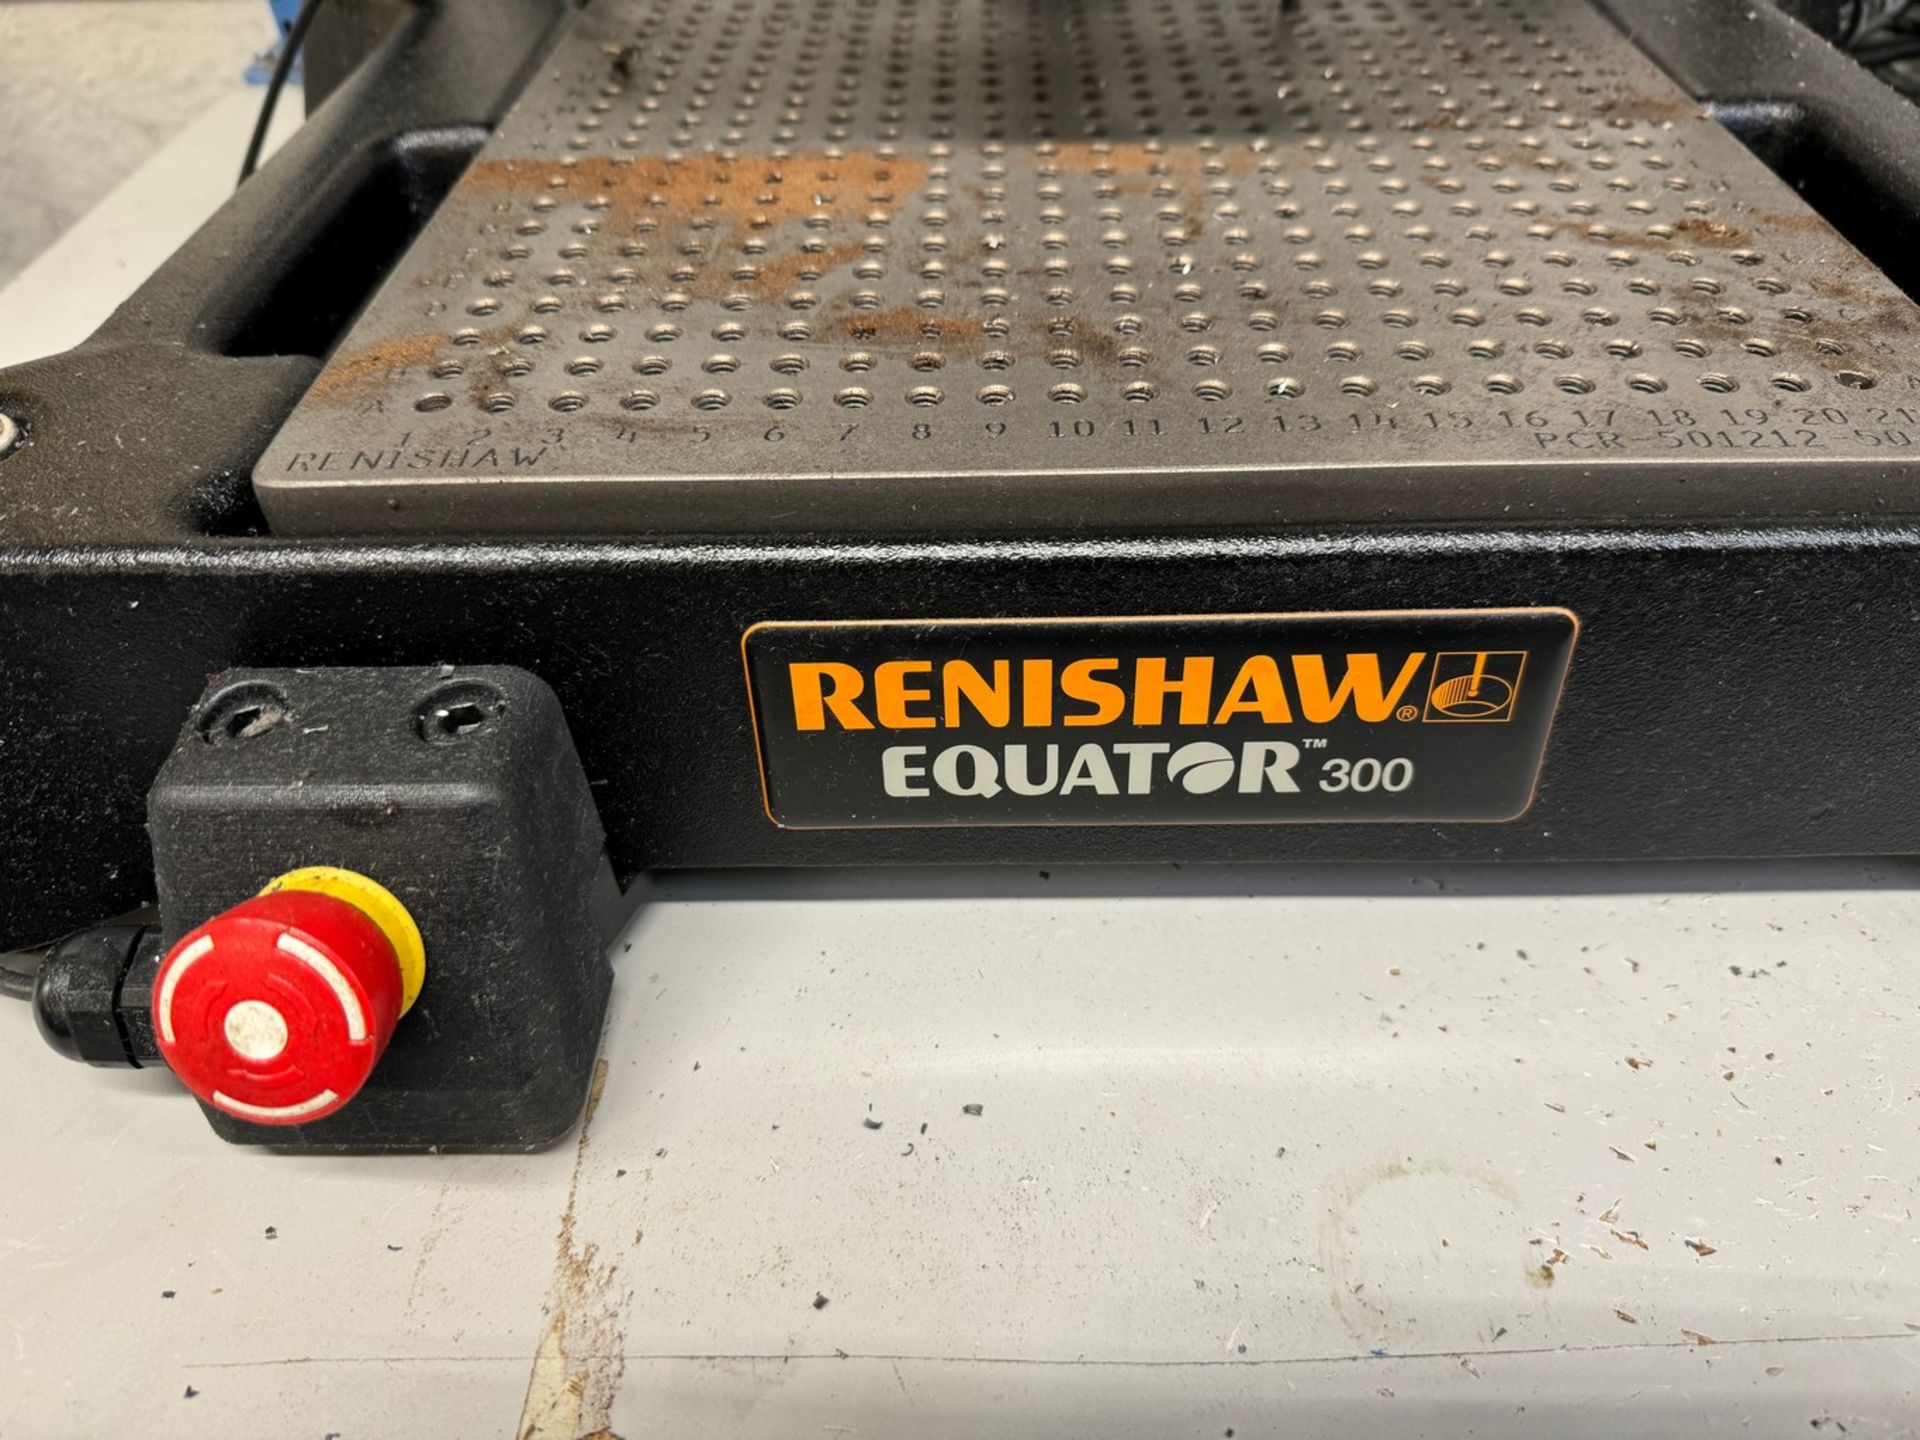 2014 Renishaw Equator 300 Bench Type Coordinate Measuring Machine, S/N 248G51 - Image 6 of 10